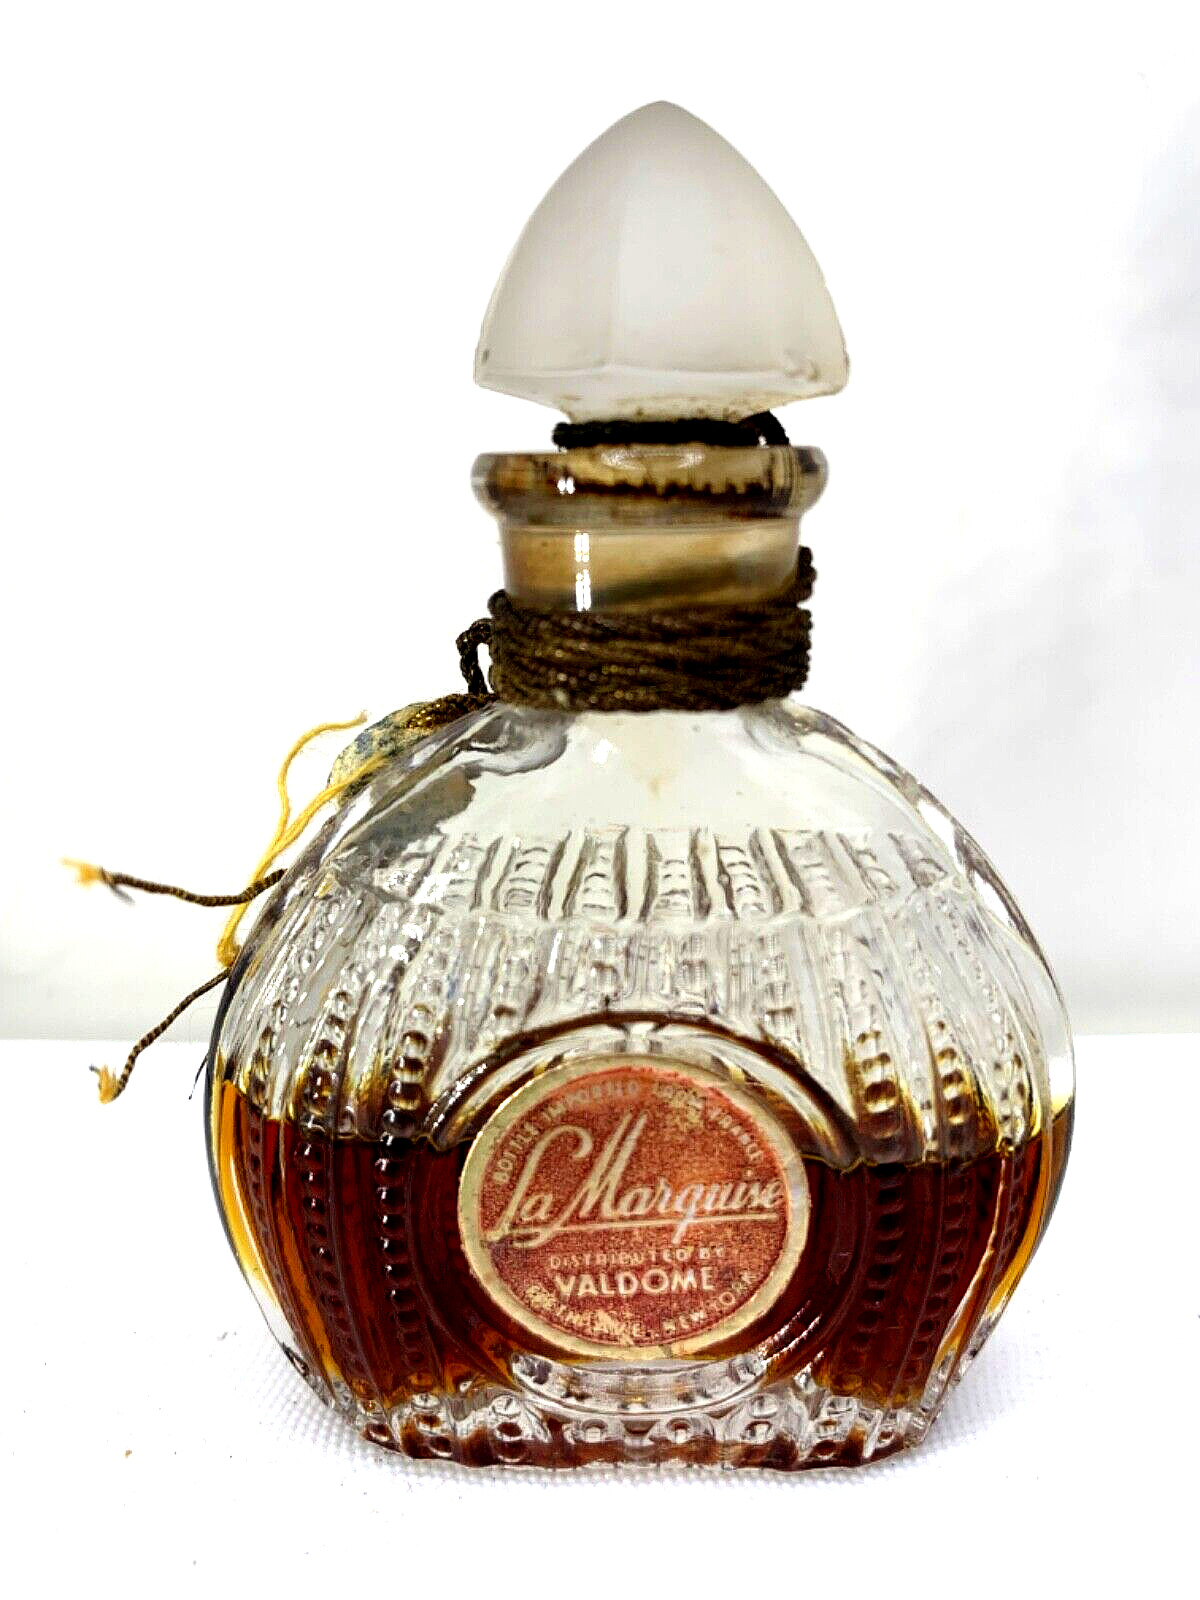 Shining   Vintage perfume bottle.  Sealed.  La Marquise by Valdome.  1940s.